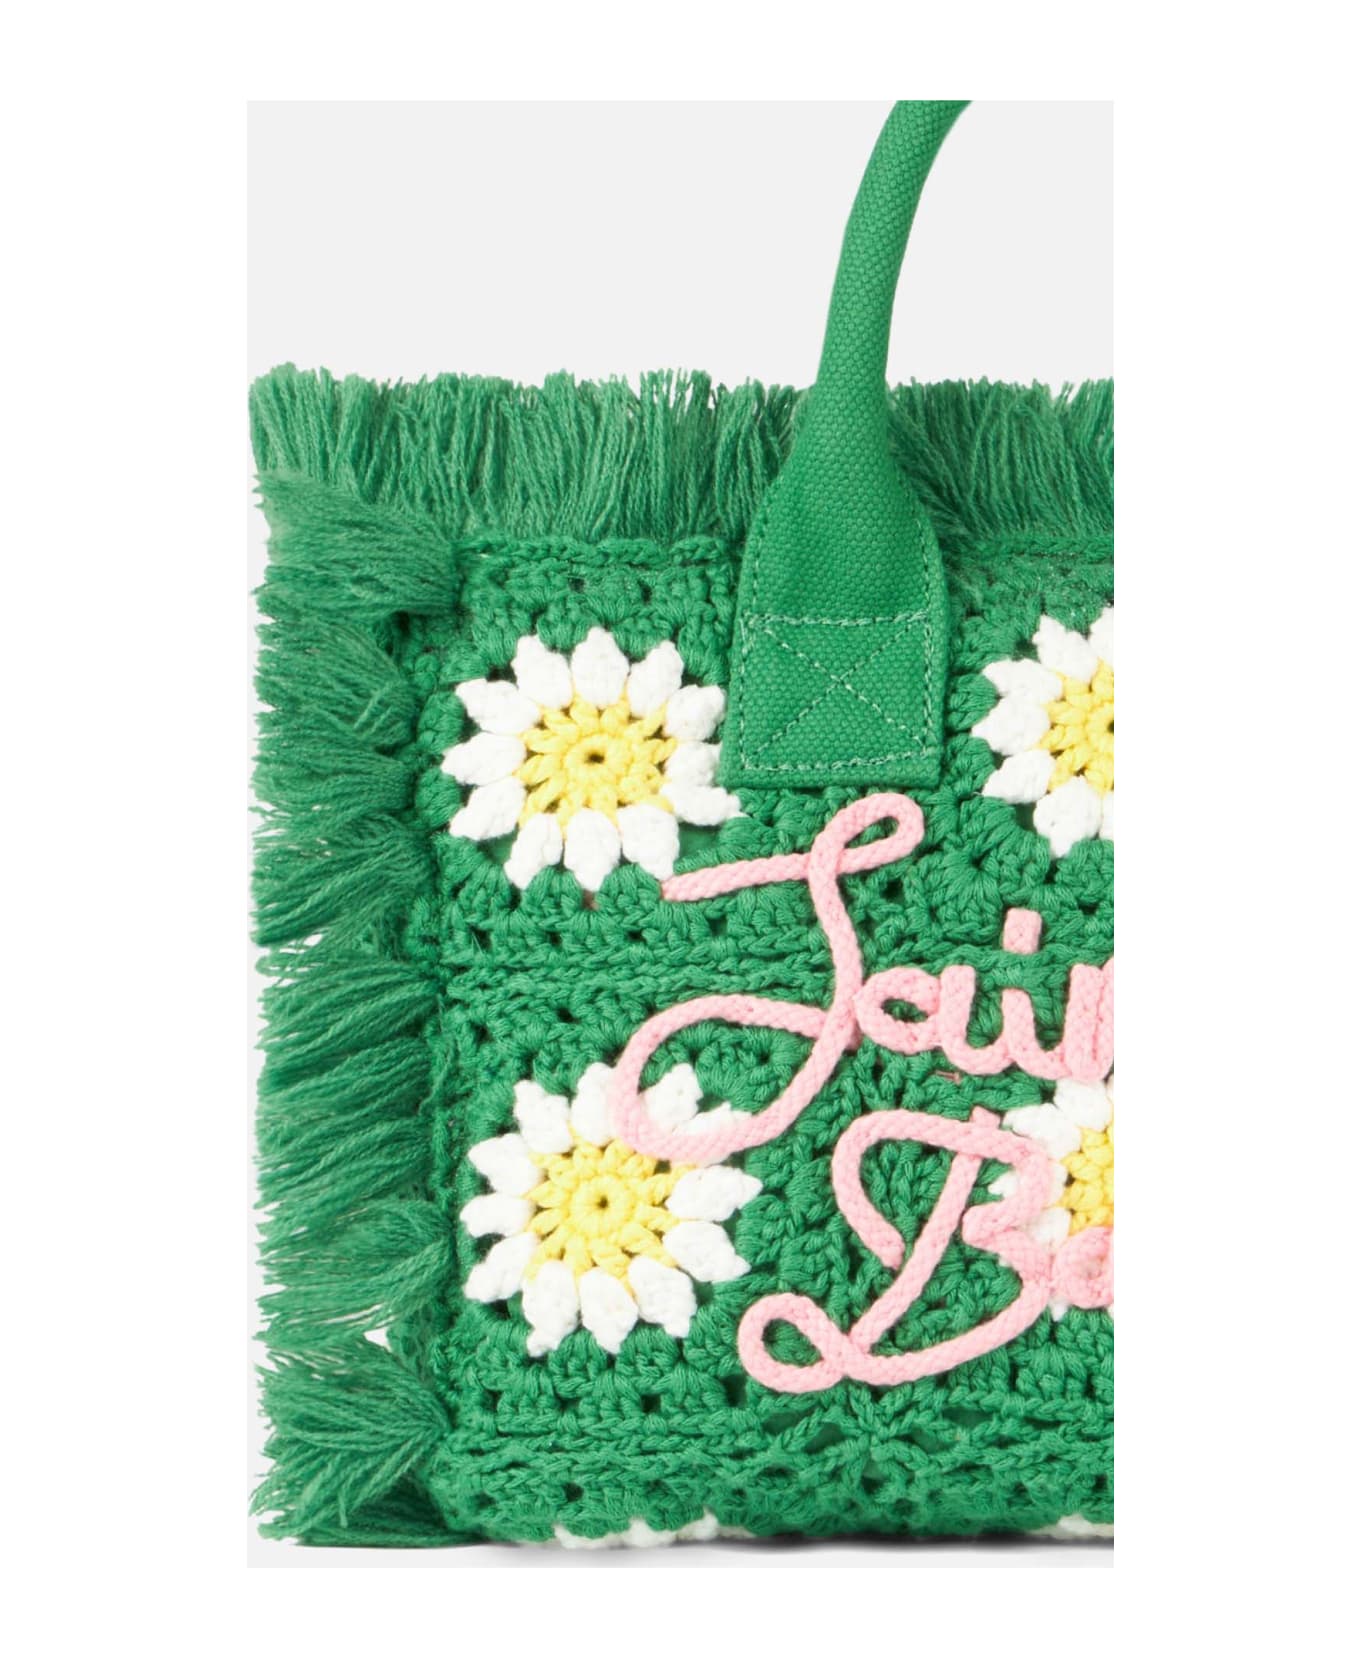 MC2 Saint Barth Colette Handbag With Crochet Flower Patches - GREEN